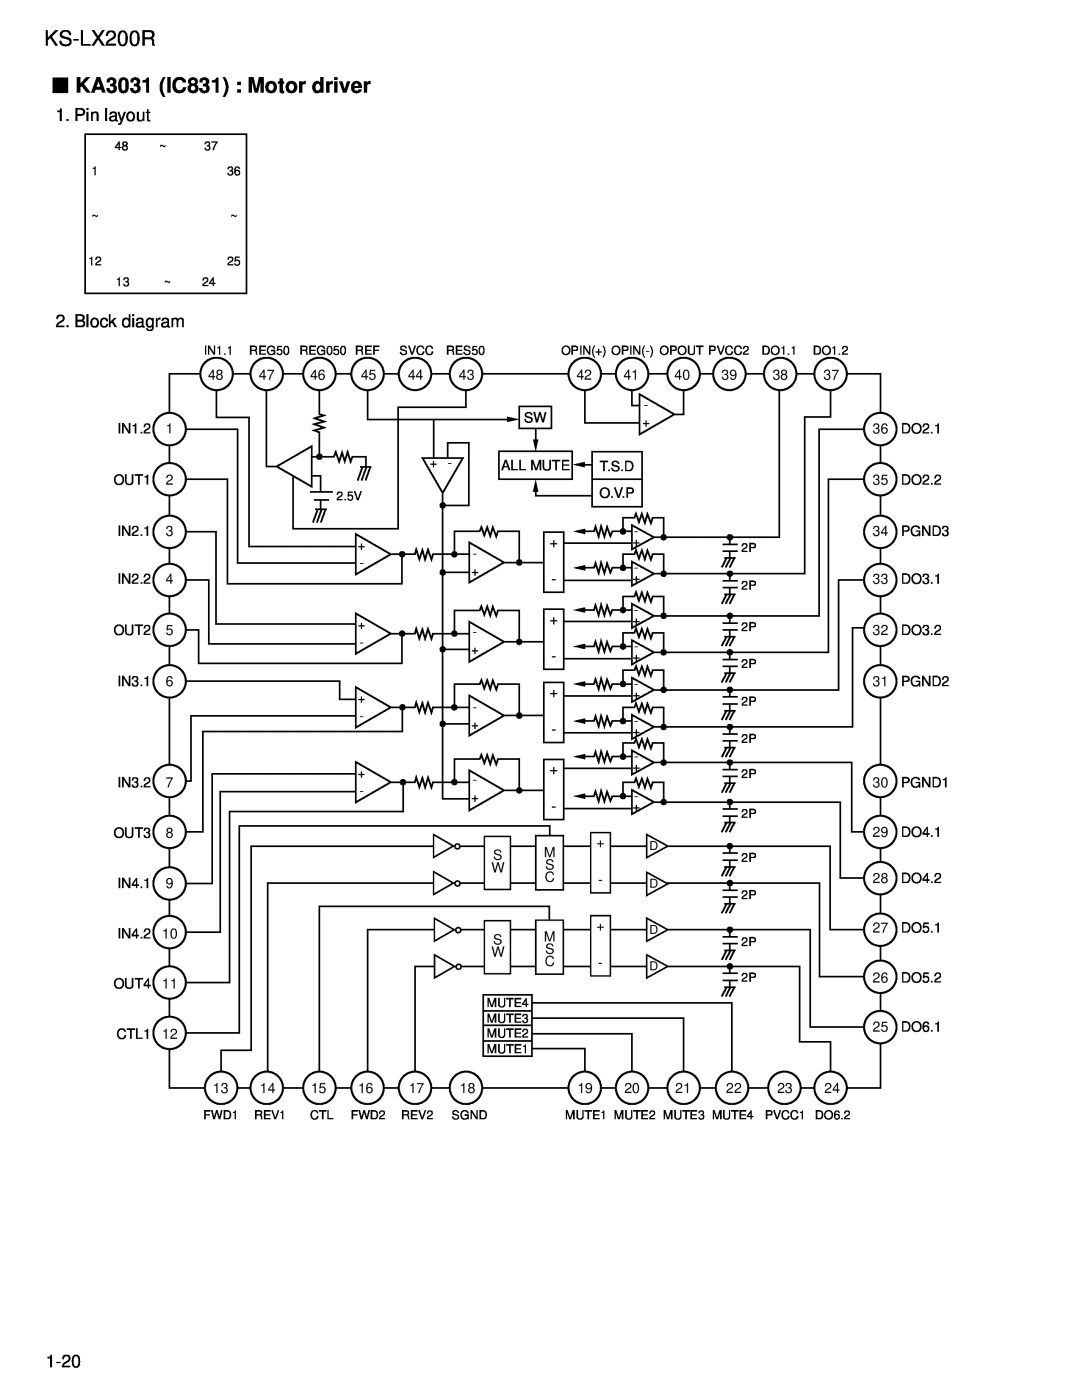 JVC KS-LX200R service manual KA3031 IC831 Motor driver, Pin layout, Block diagram, 1-20 